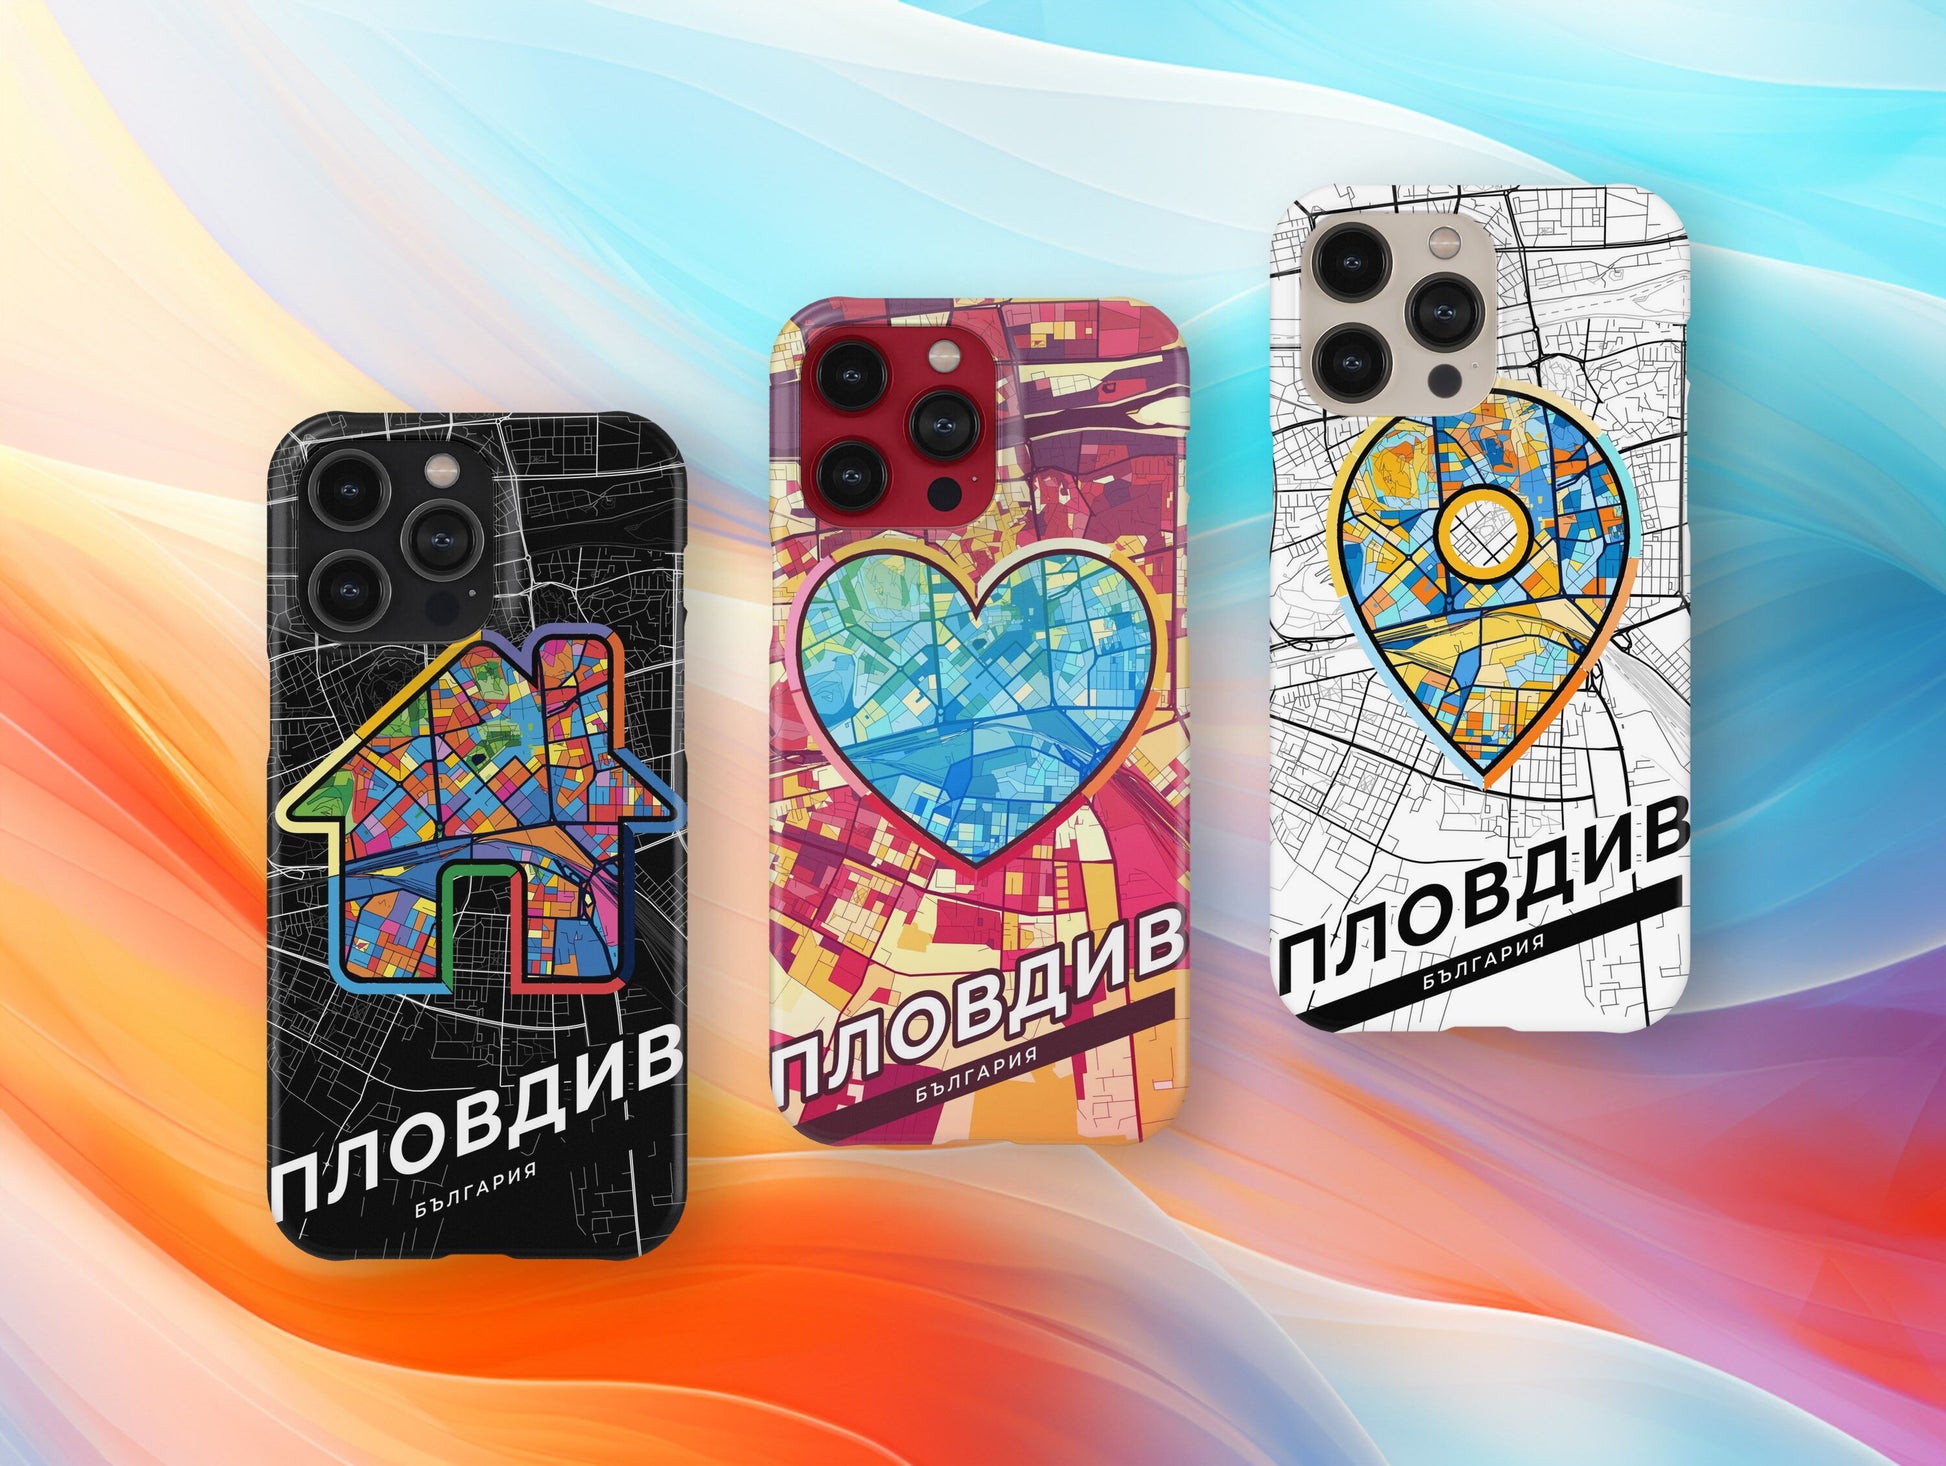 Пловдив България slim phone case with colorful icon